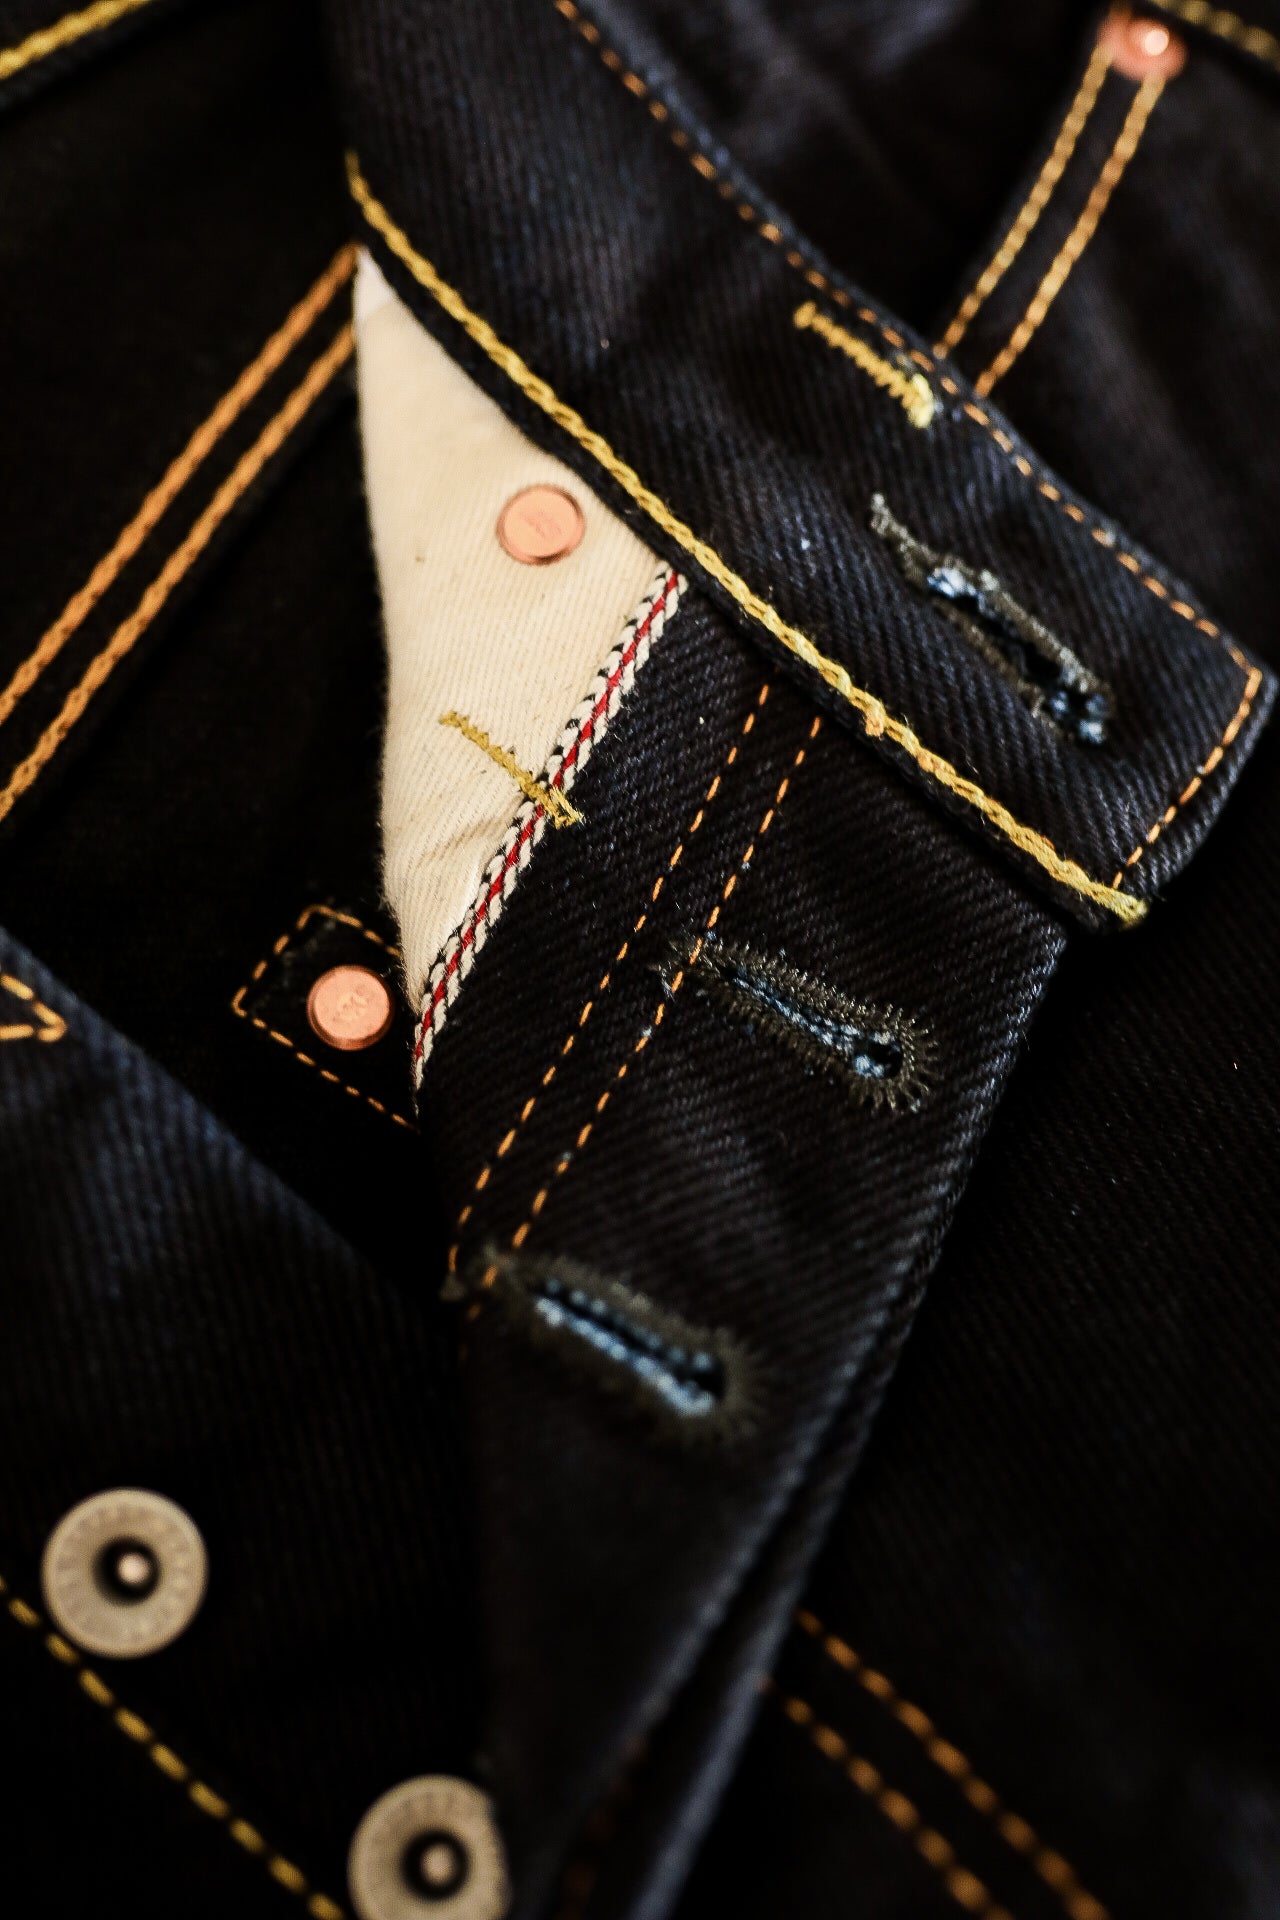 21oz 888 Selvedge Denim Jeans - Indigo/Black